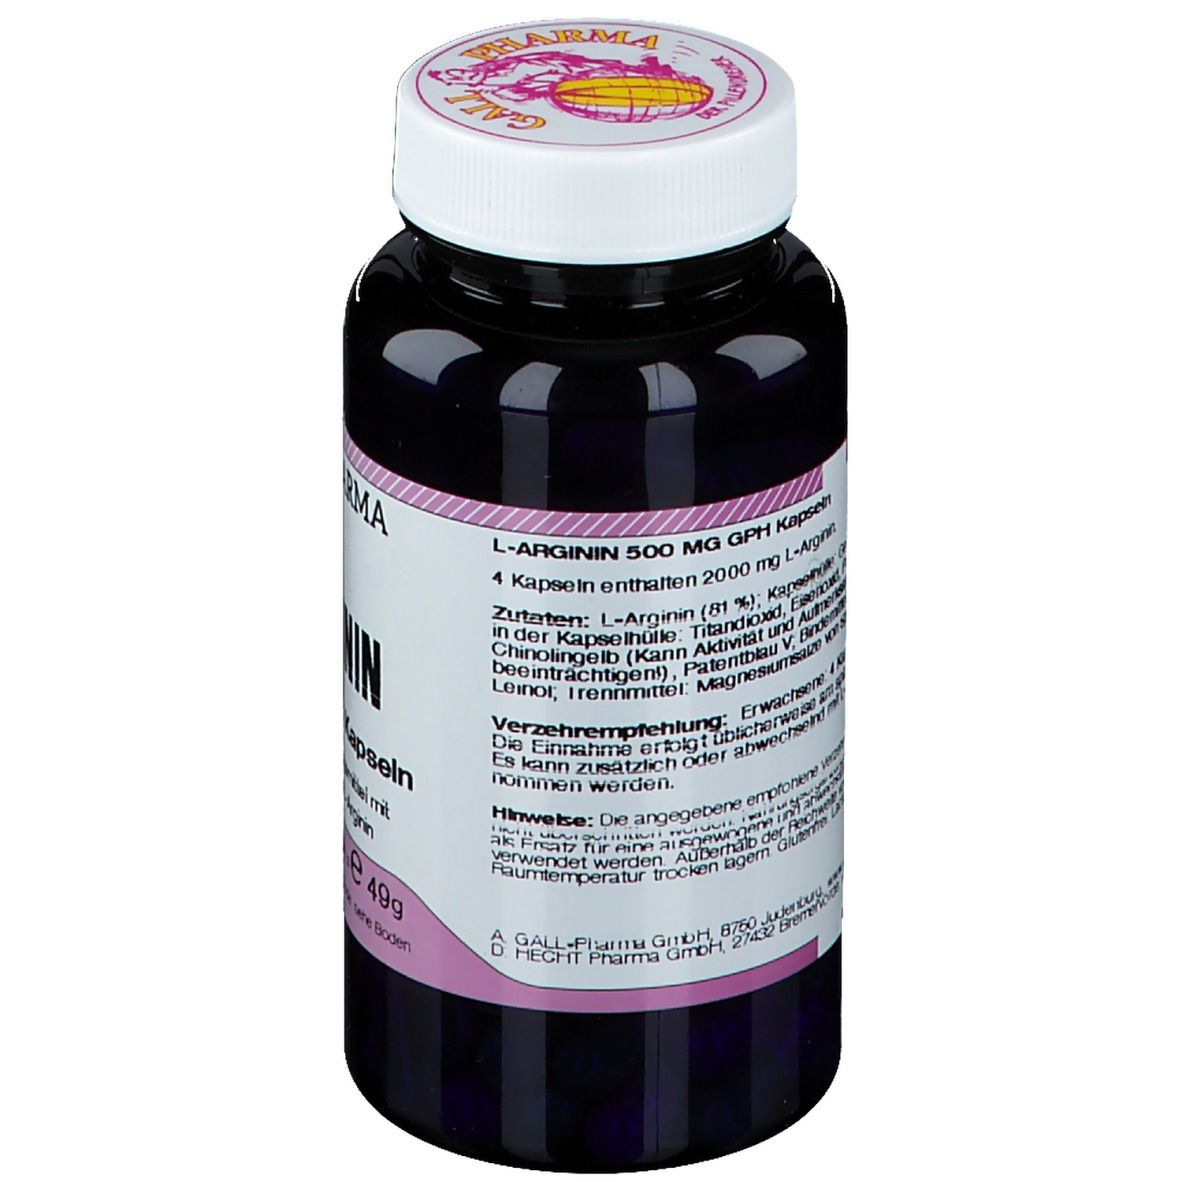 GALL PHARMA L-Arginin 500 mg